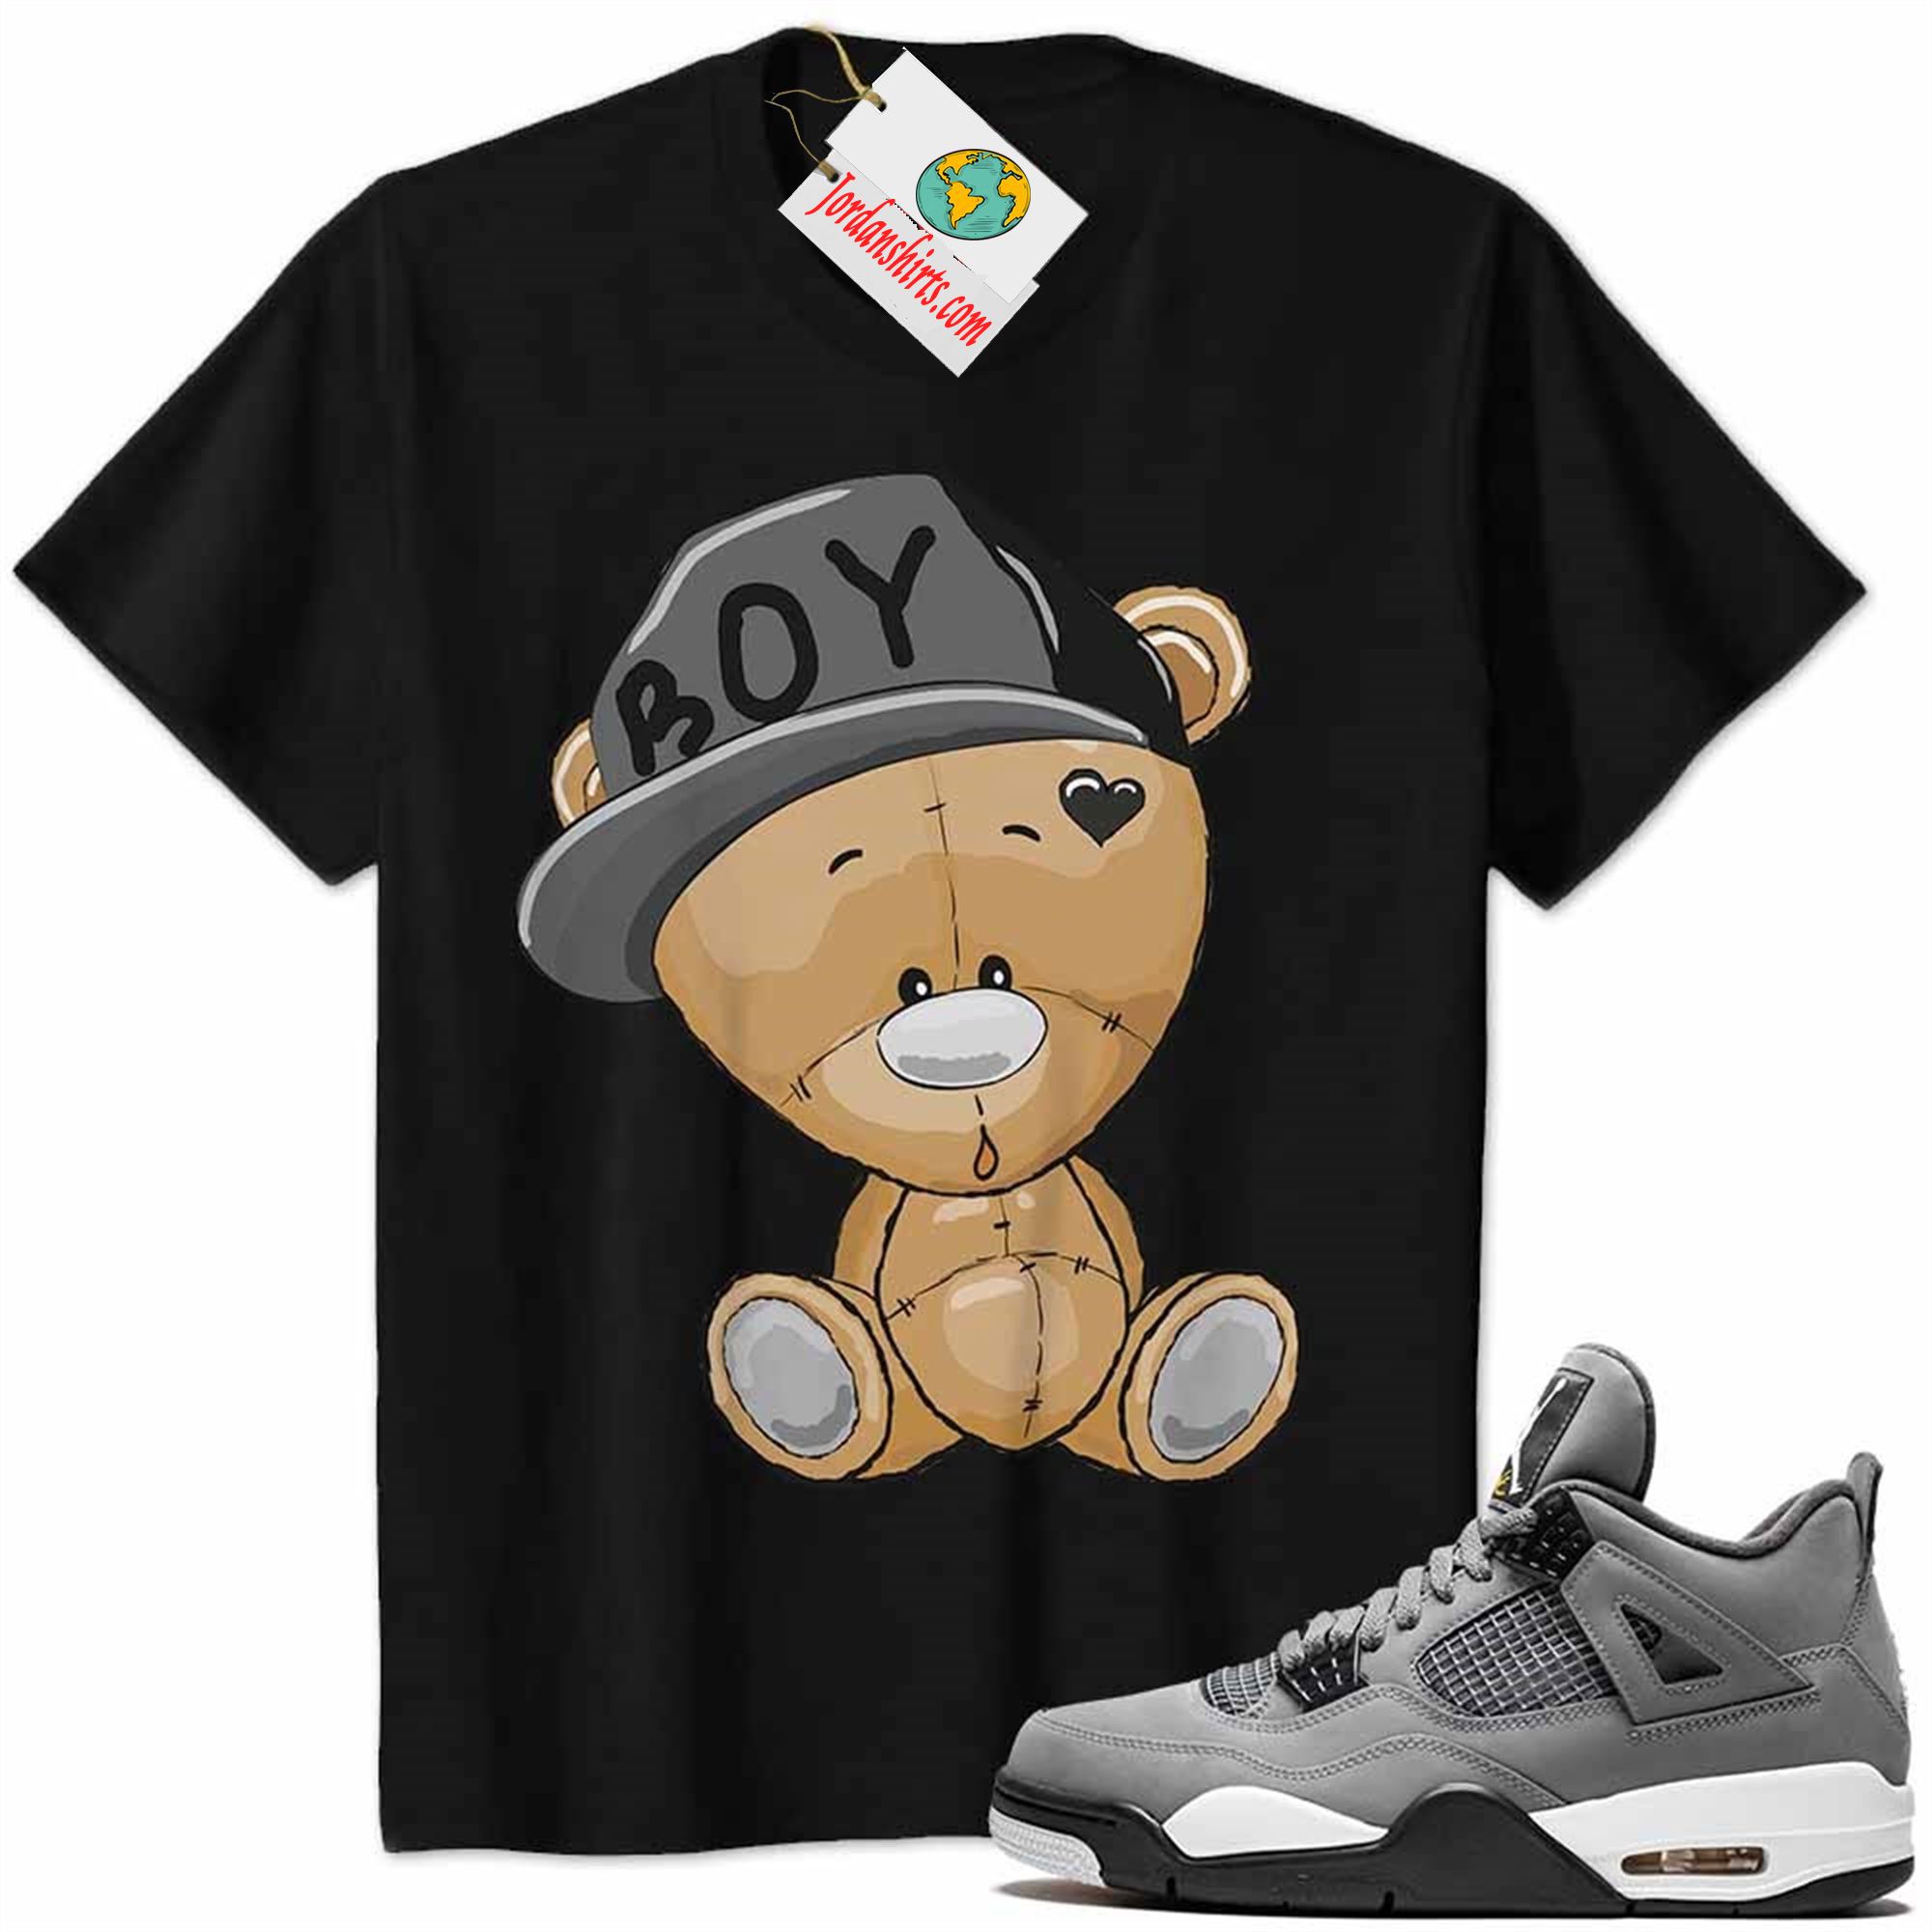 Jordan 4 Shirt, Jordan 4 Cool Grey Shirt Cute Baby Teddy Bear Black Size Up To 5xl